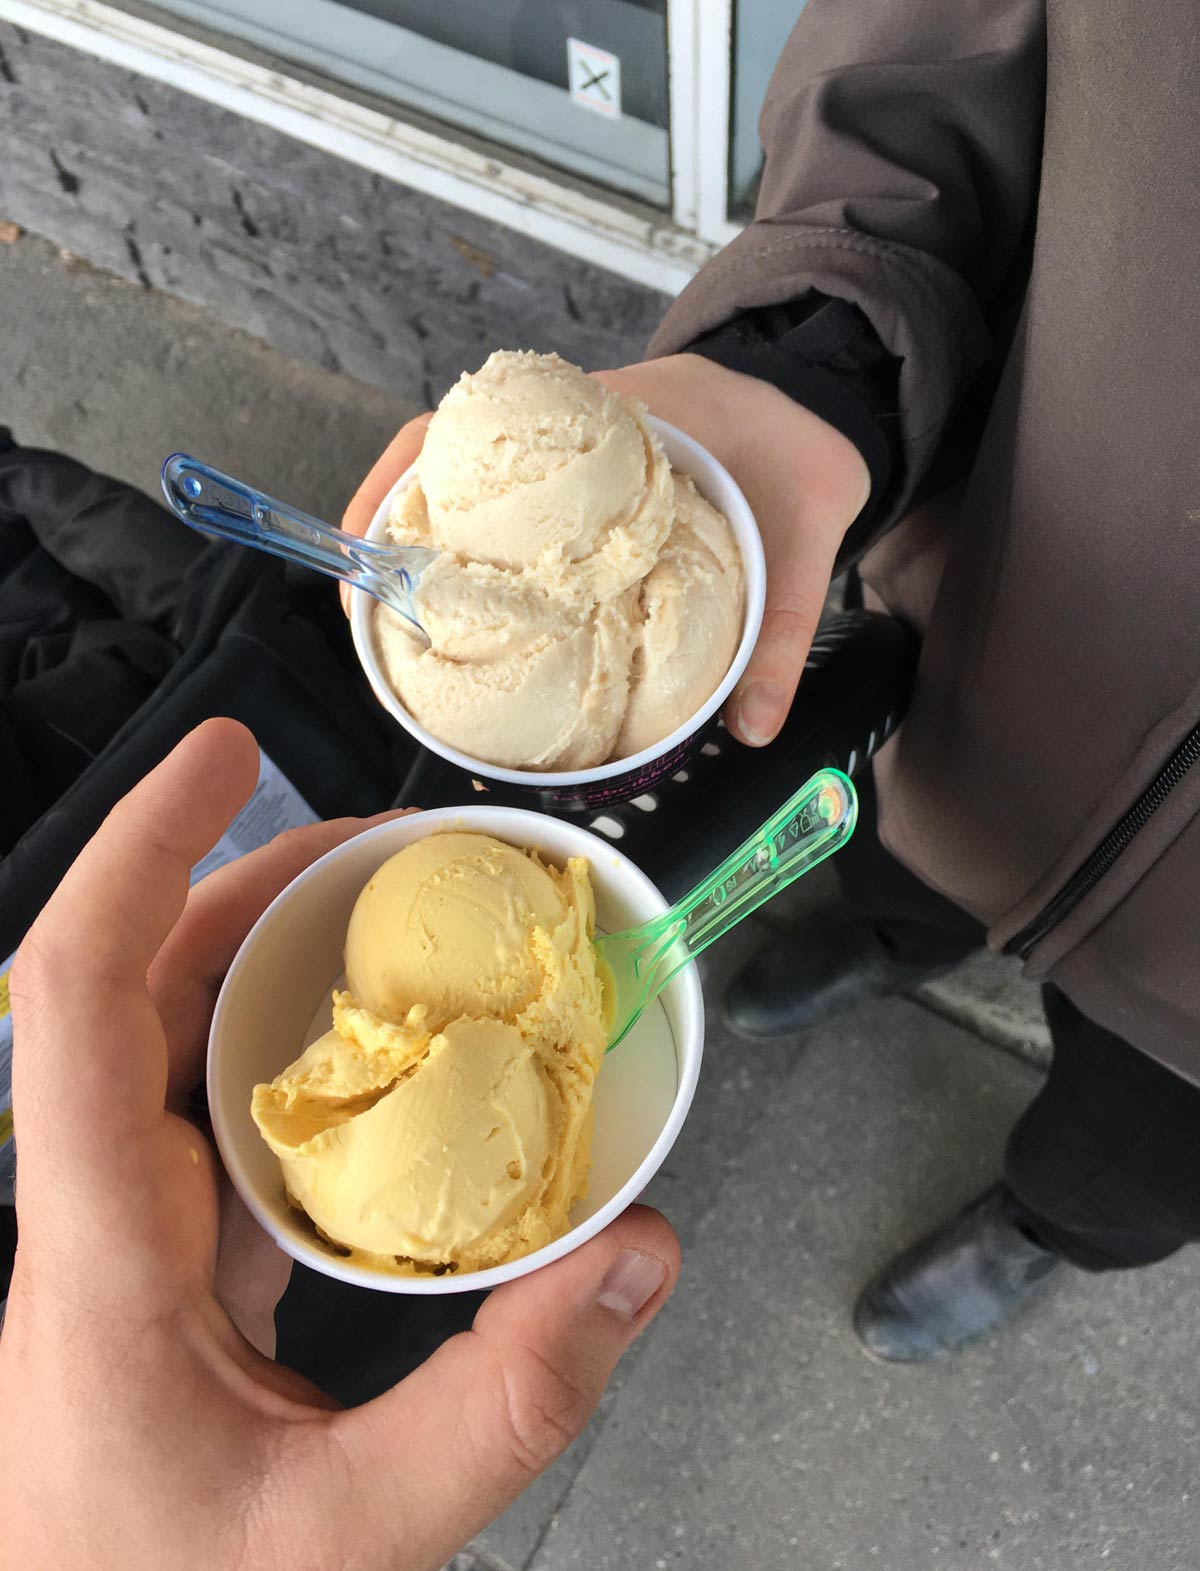 We both ordered one scoop of ice cream. I think the ice cream vendor likes my wife